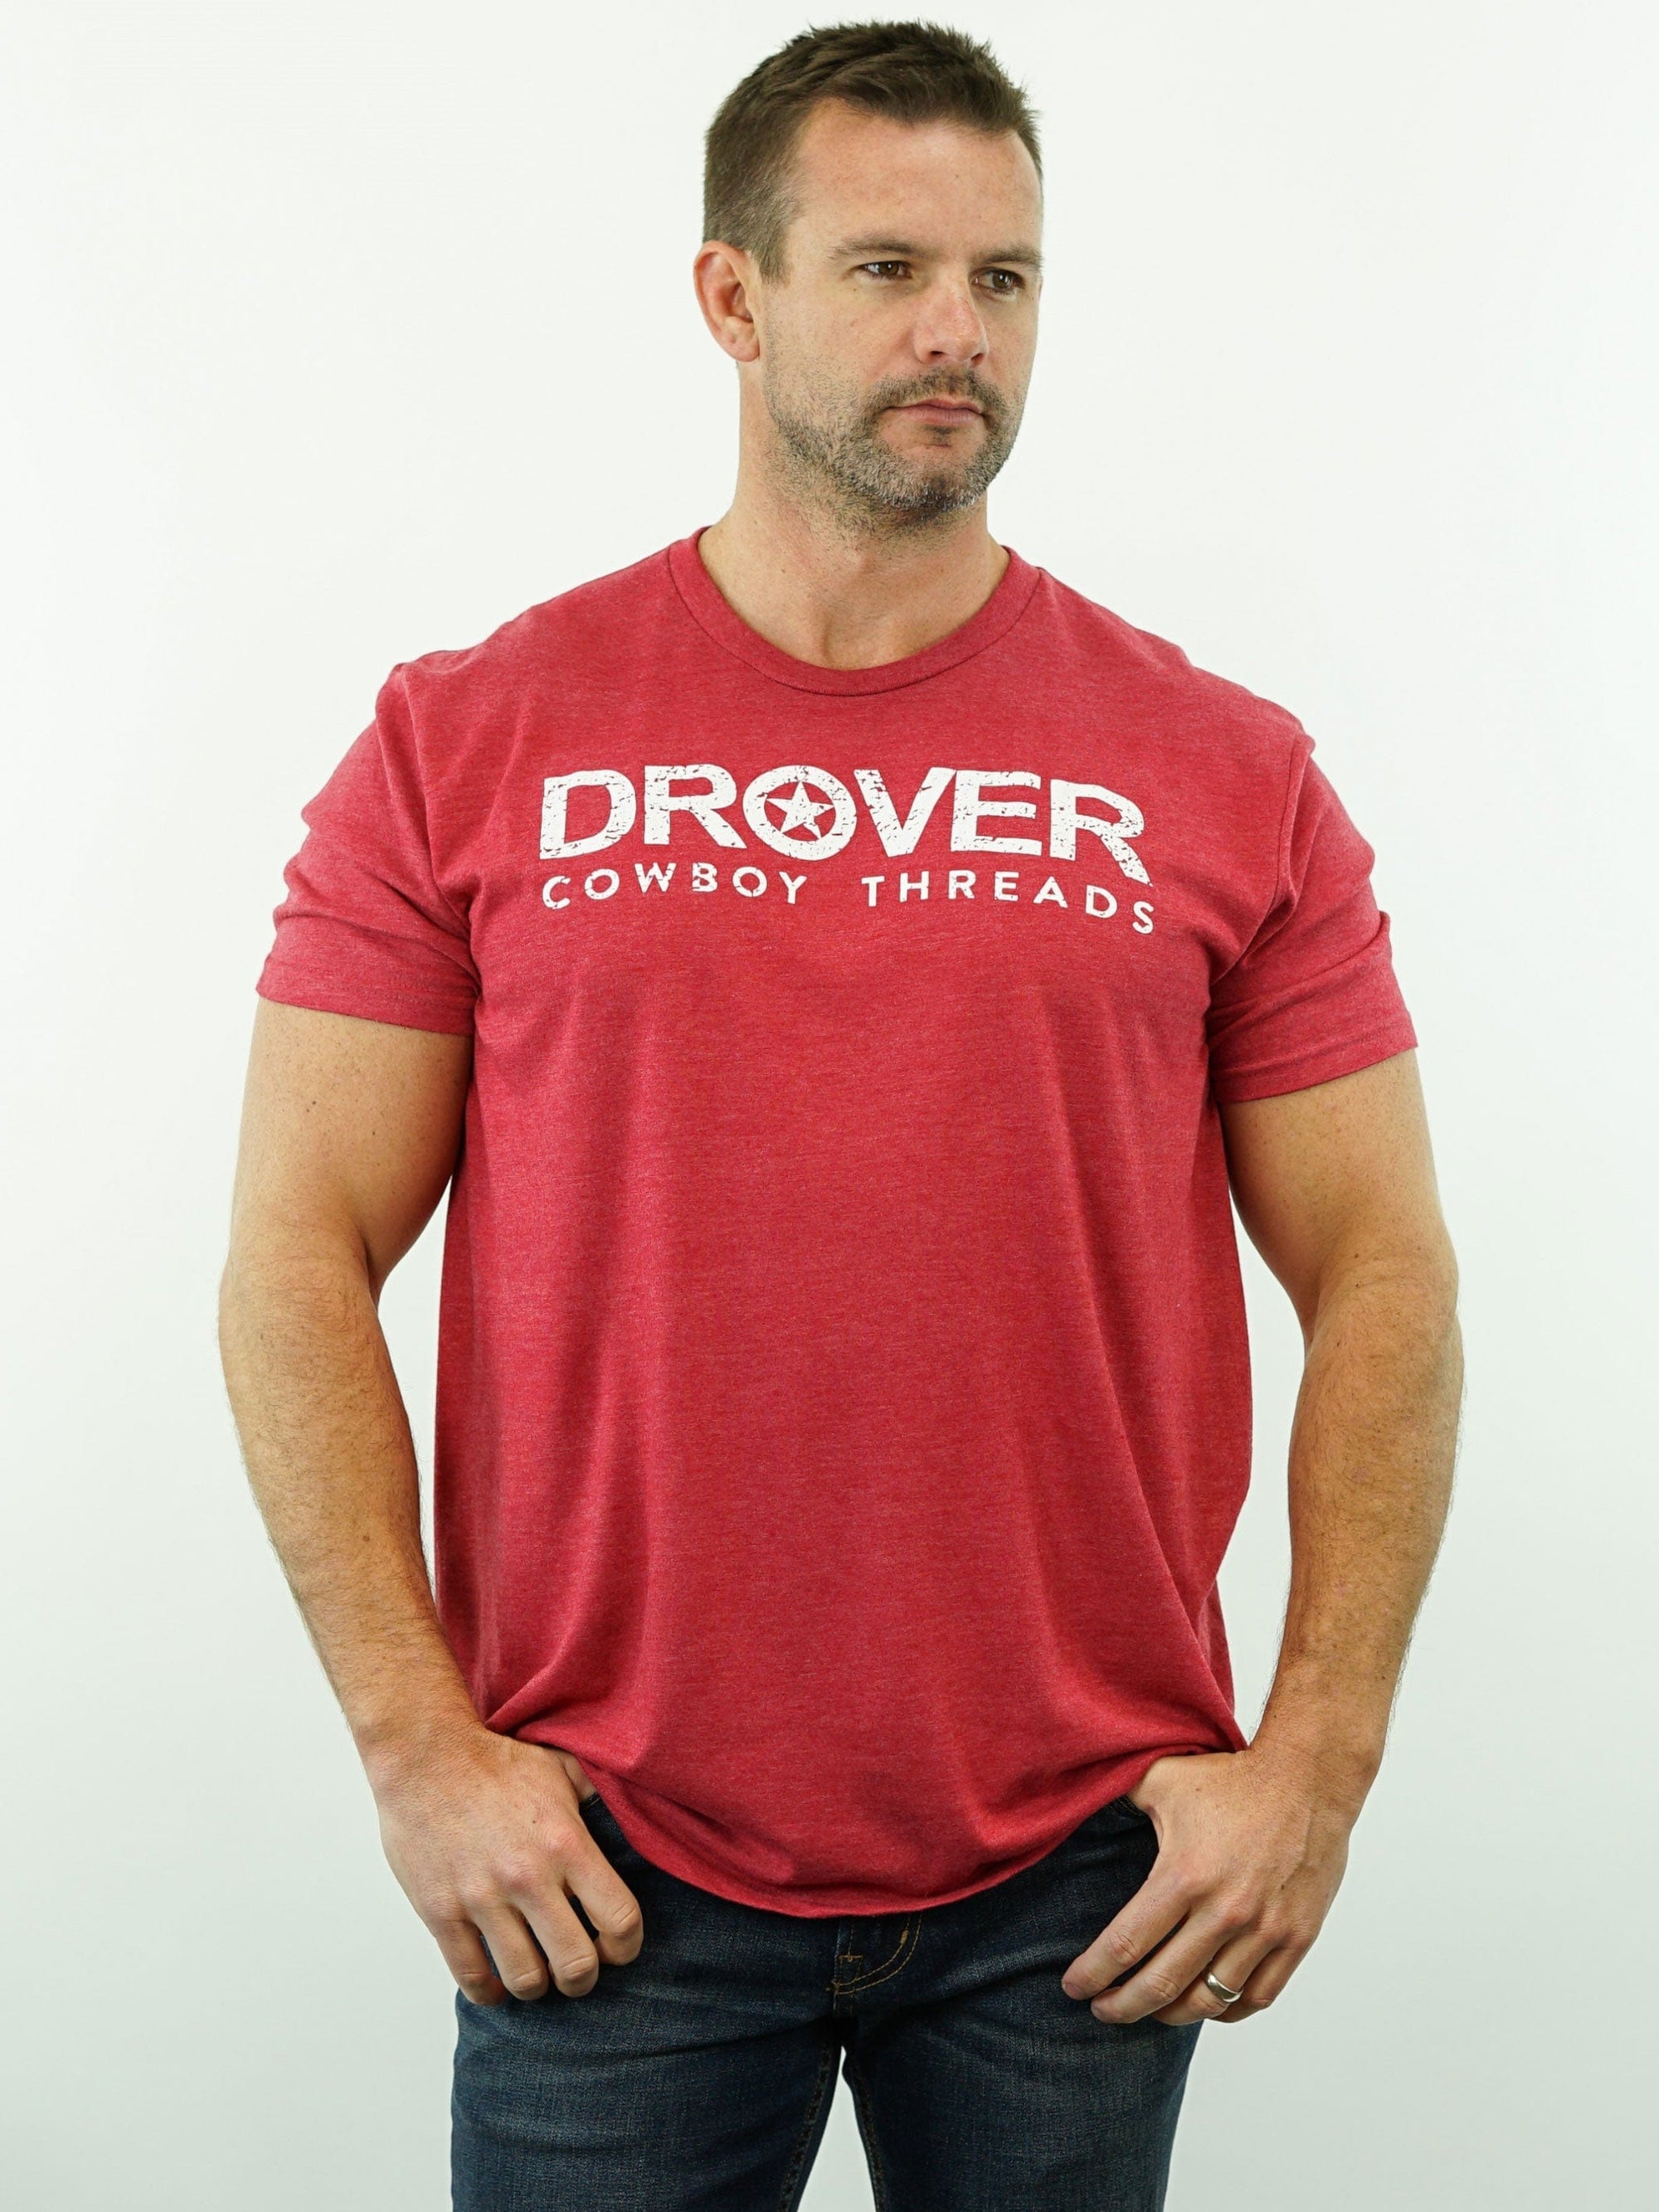 Drover Cowboy Threads Shirts T-Shirt - Drover Cowboy Threads - Red Heather